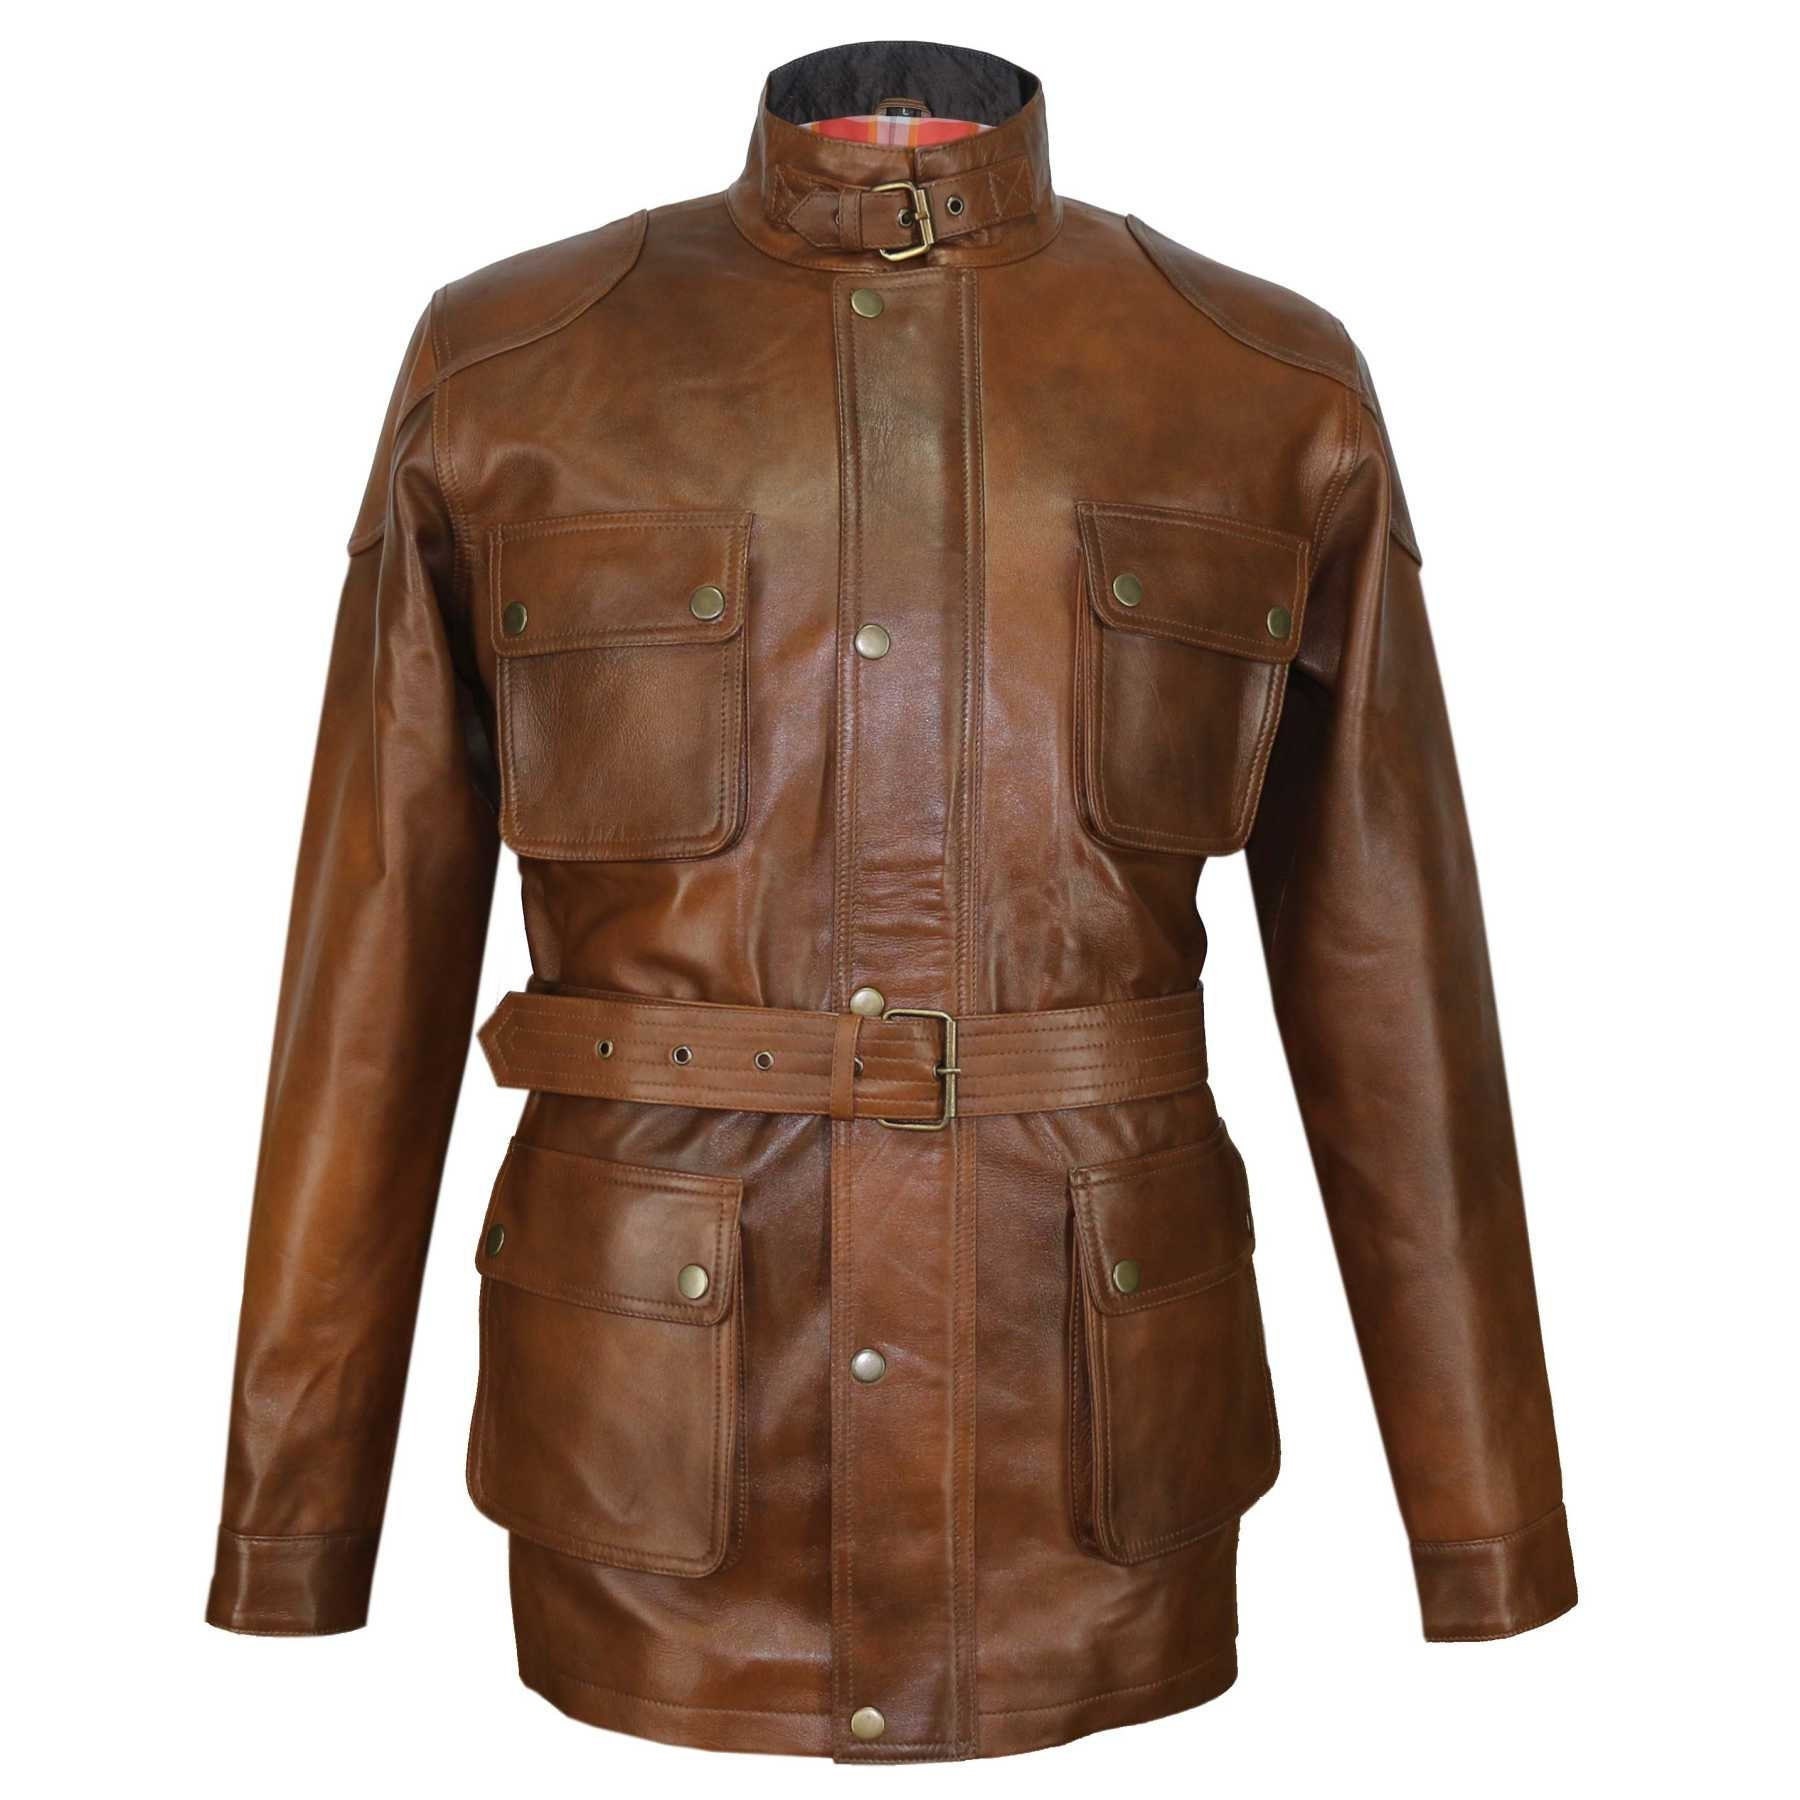 Vintage Brown Benjamin Leather Jacket Men's Military Army - Etsy